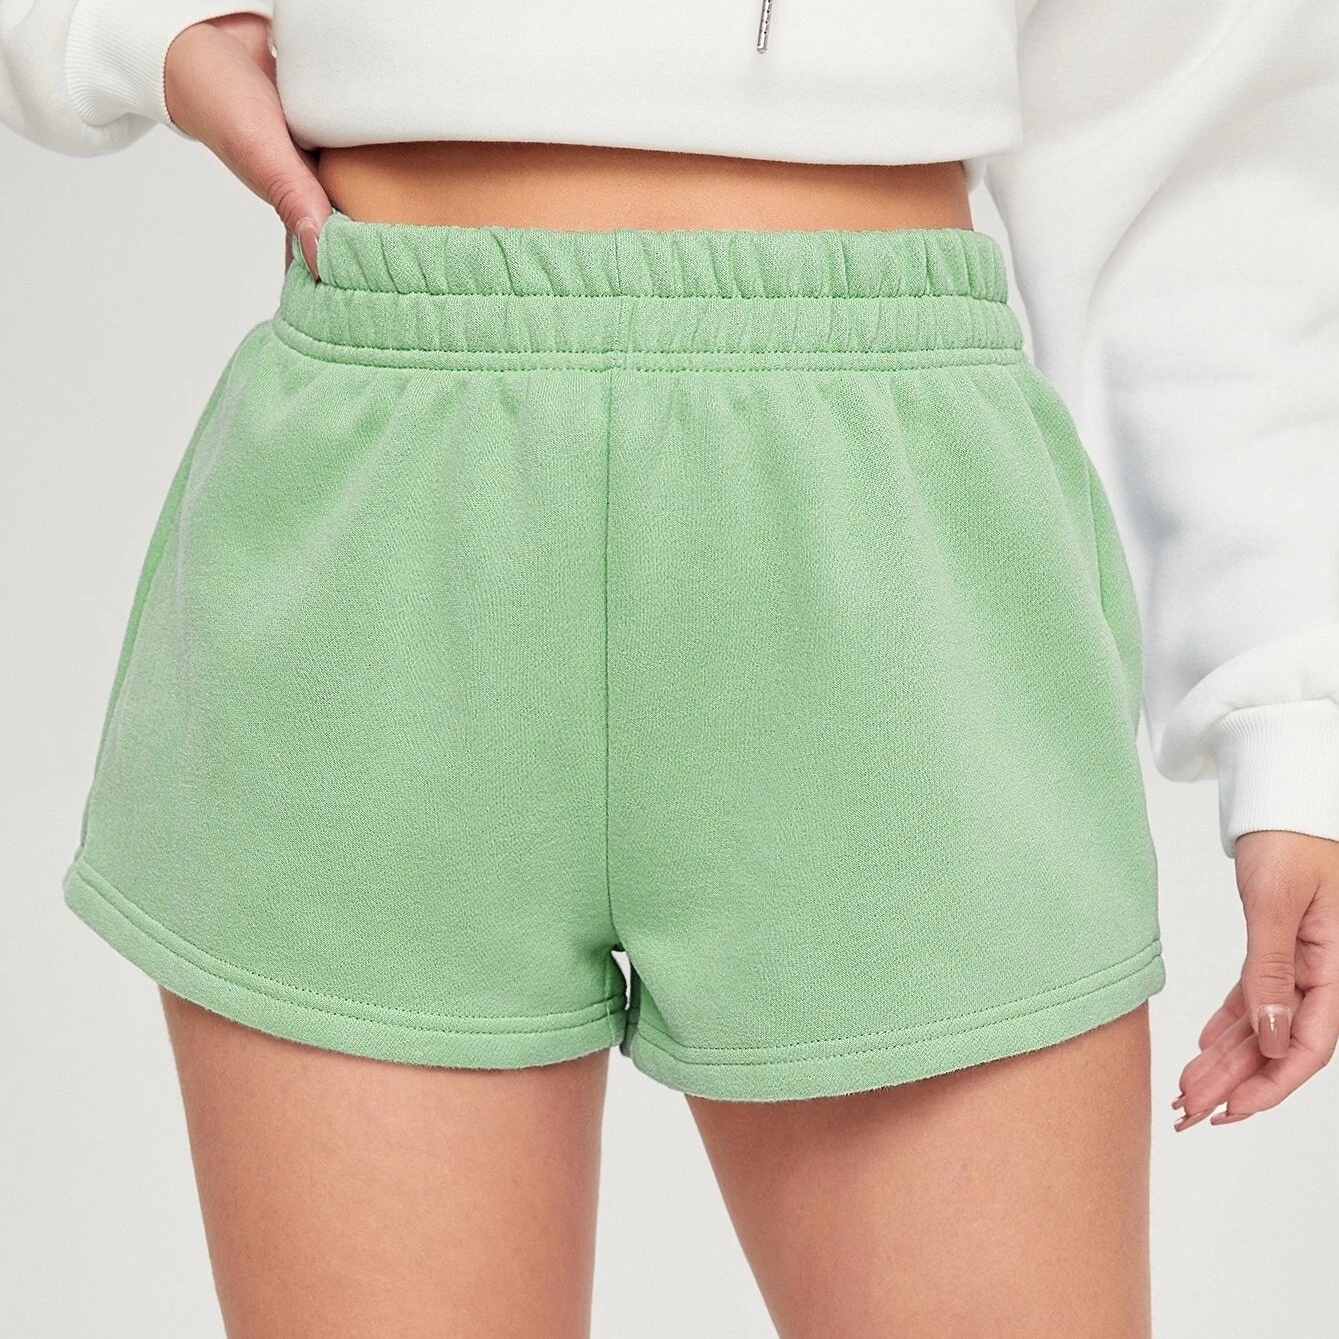 Elastic Waist Sweat Shorts - Mint Green, S